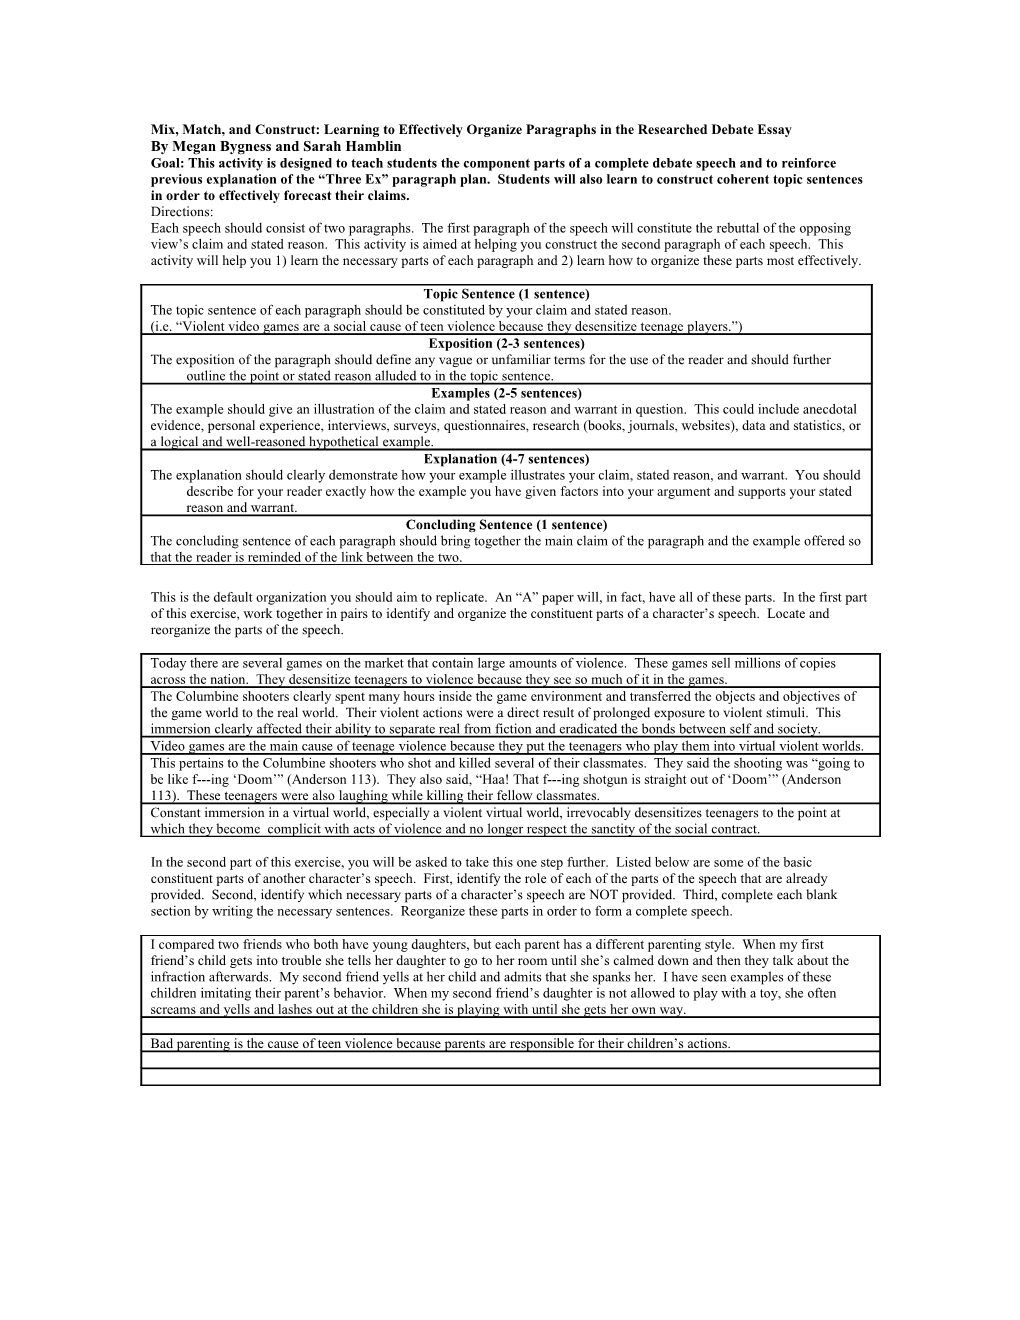 Researched Debate Essay Paragraph Organization (Hamblin/Bygness)